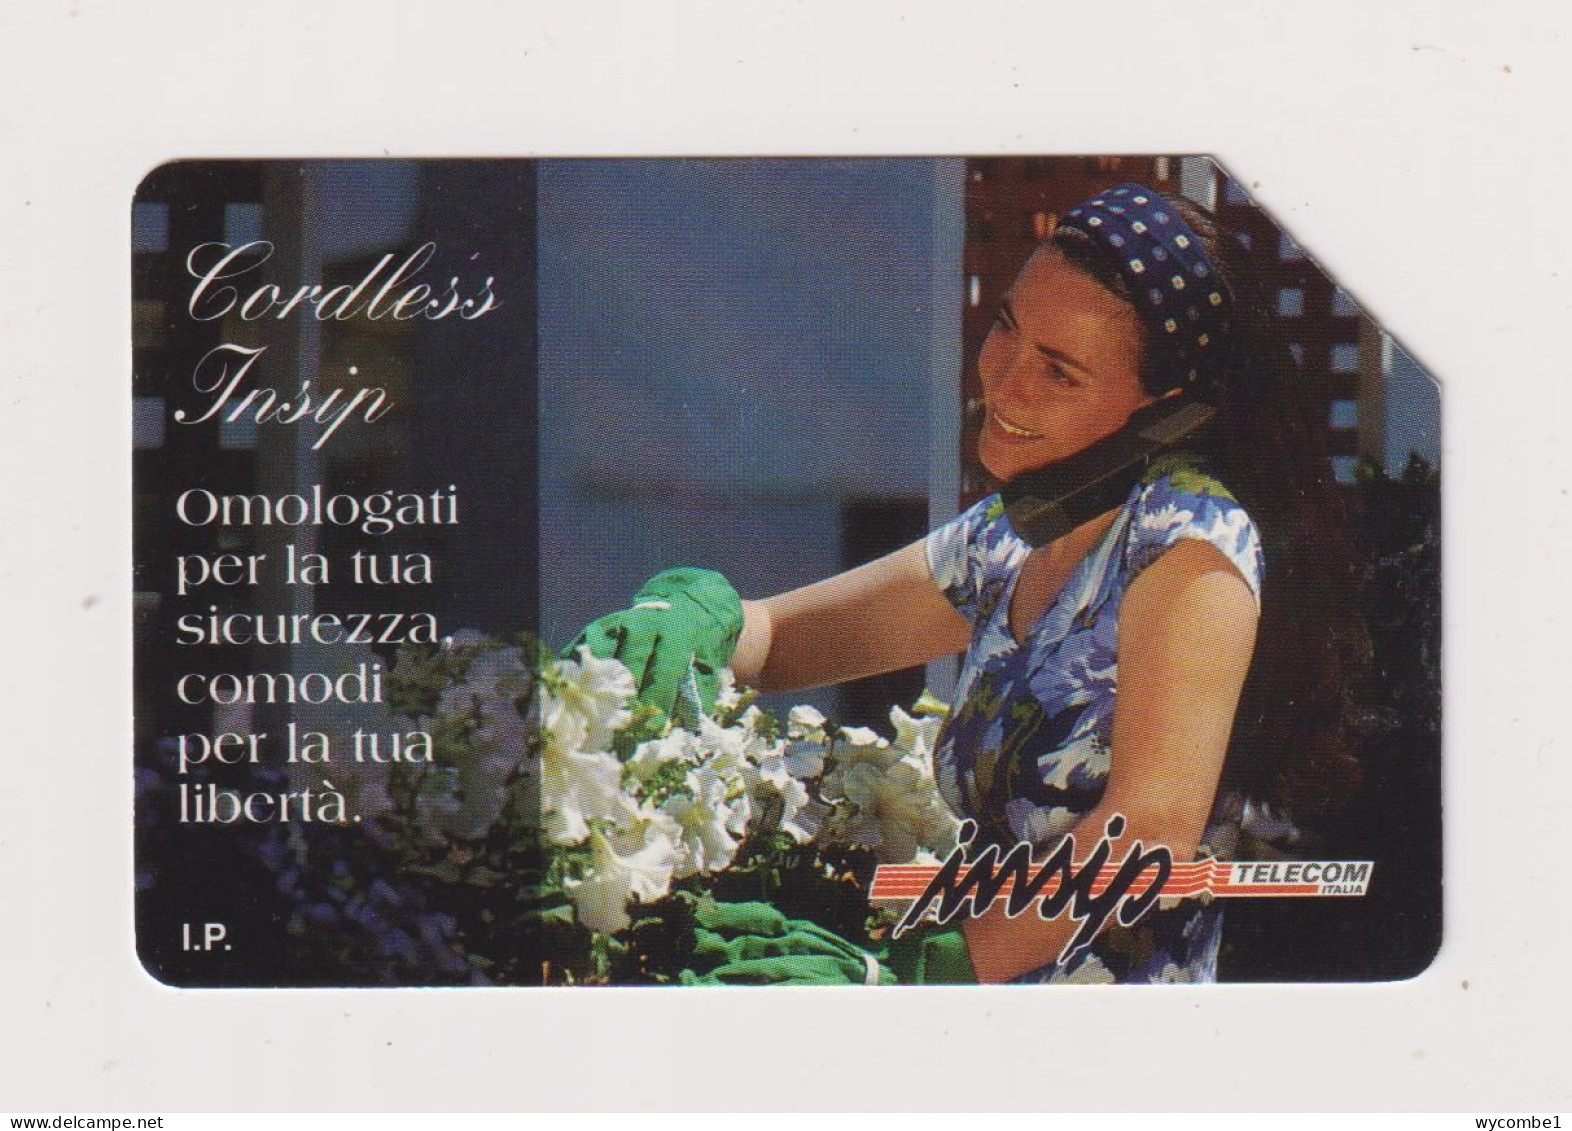 ITALY - Cordless Insip Urmet  Phonecard - Openbaar Gewoon